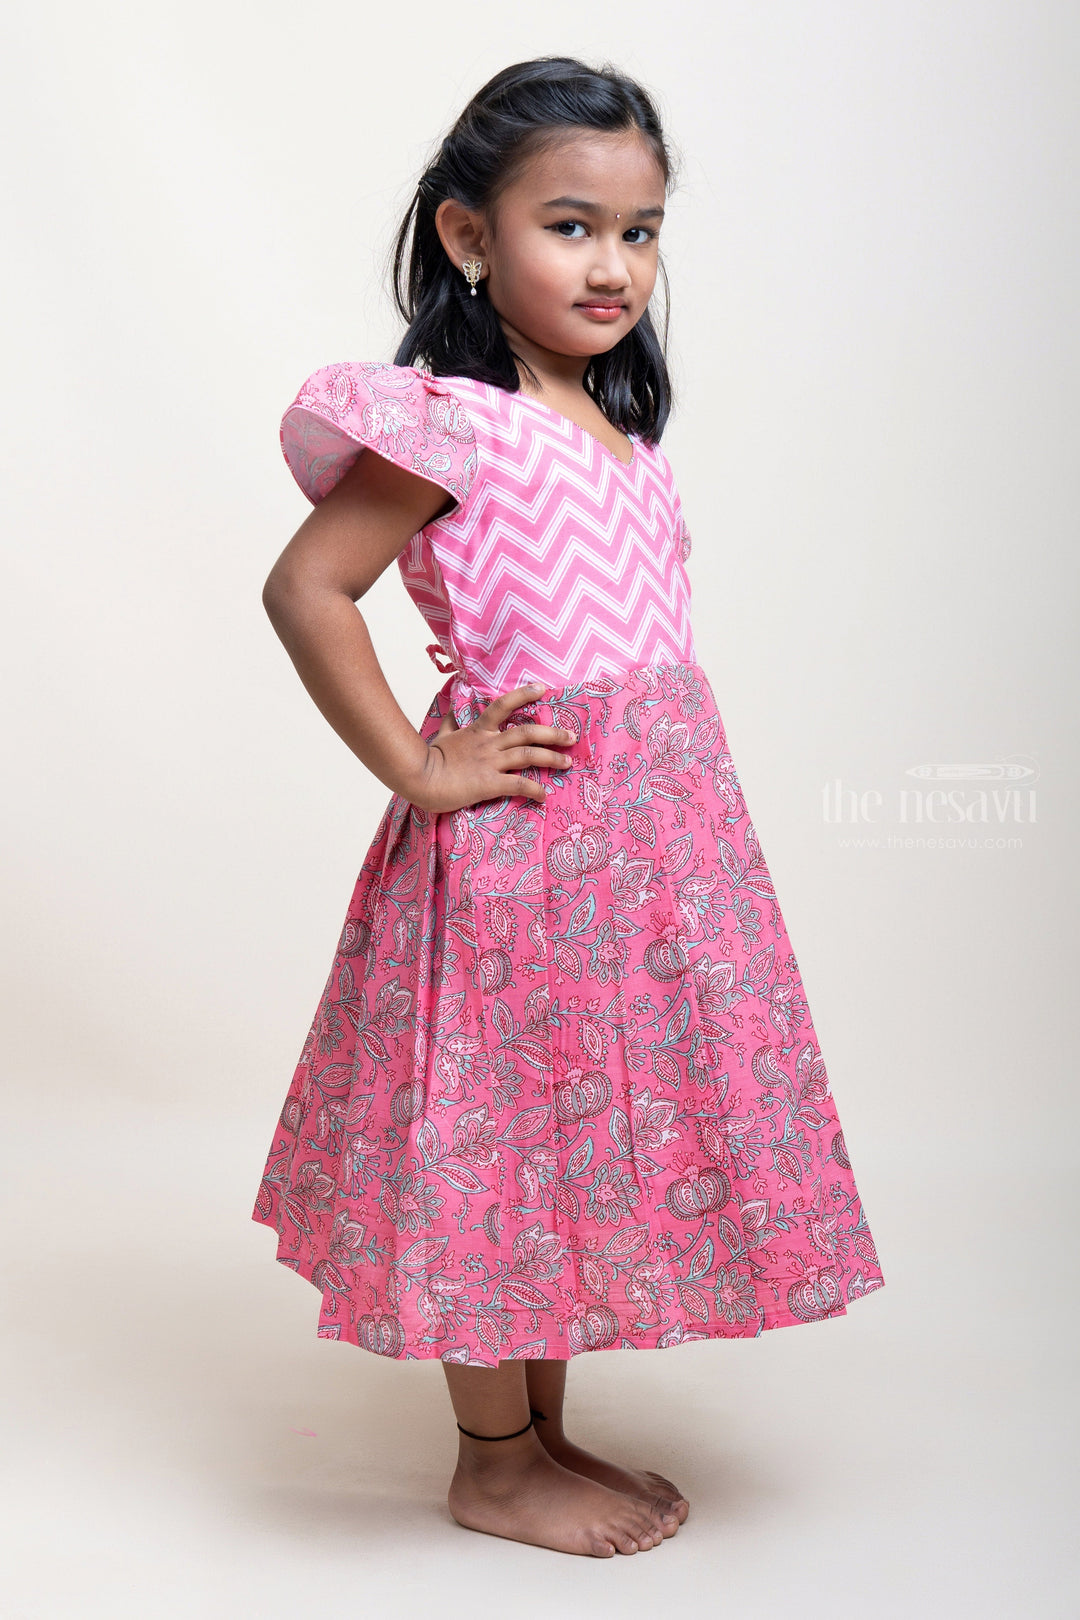 The Nesavu Girls Cotton Frock Latest Design Pink Cotton Frock For Girls With Cap Sleeves Nesavu Cap Sleeves Cotton Frocks| Best Design Dresses| The Nesavu